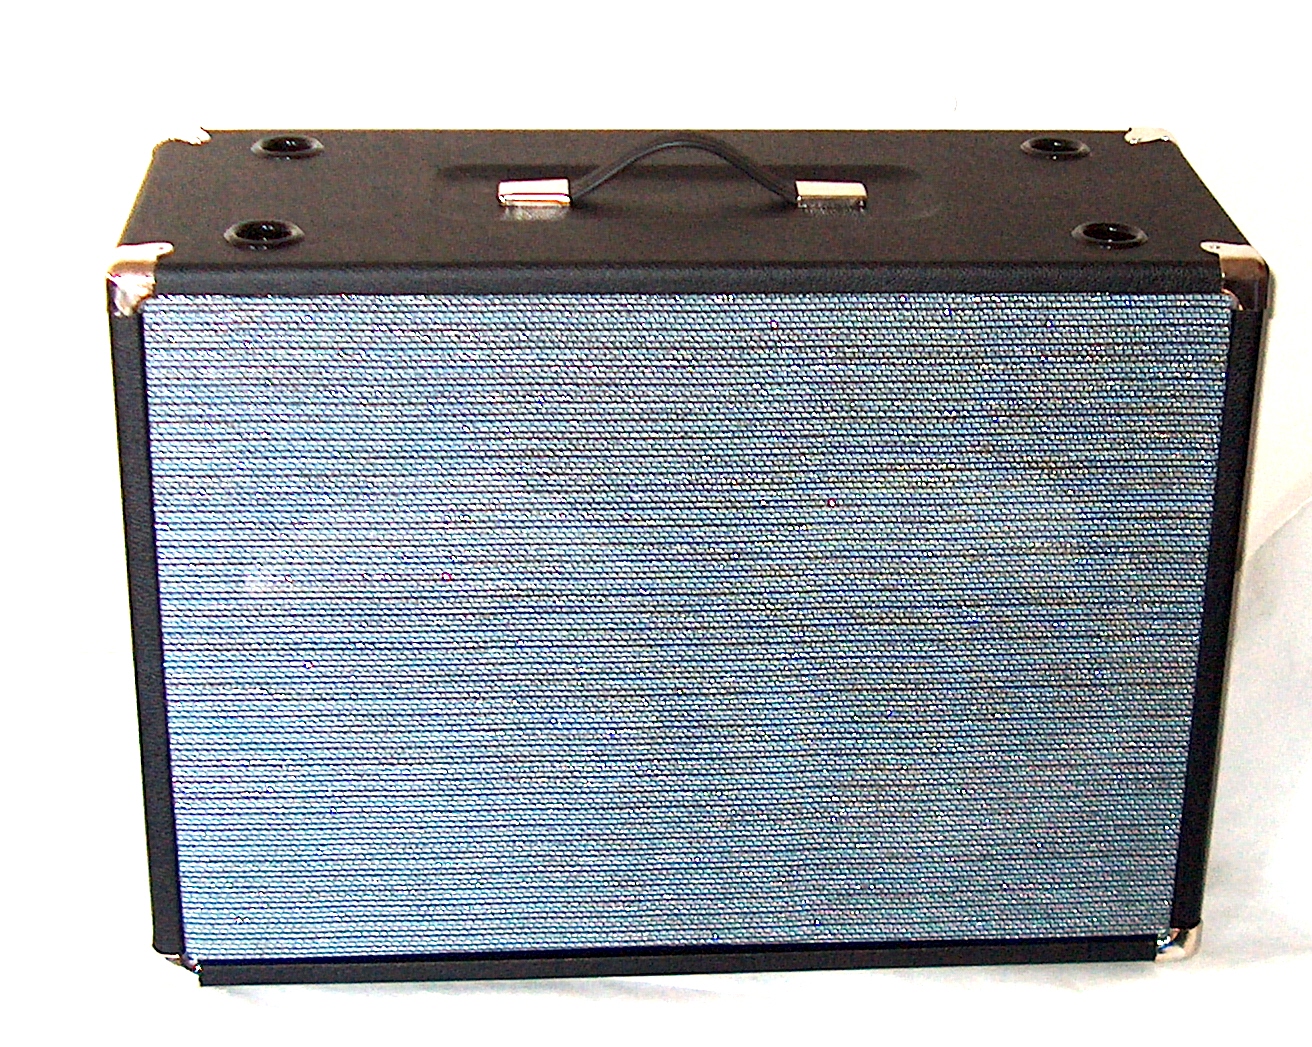 Speaker Cabinet 2X12 VT22 Style Product Details